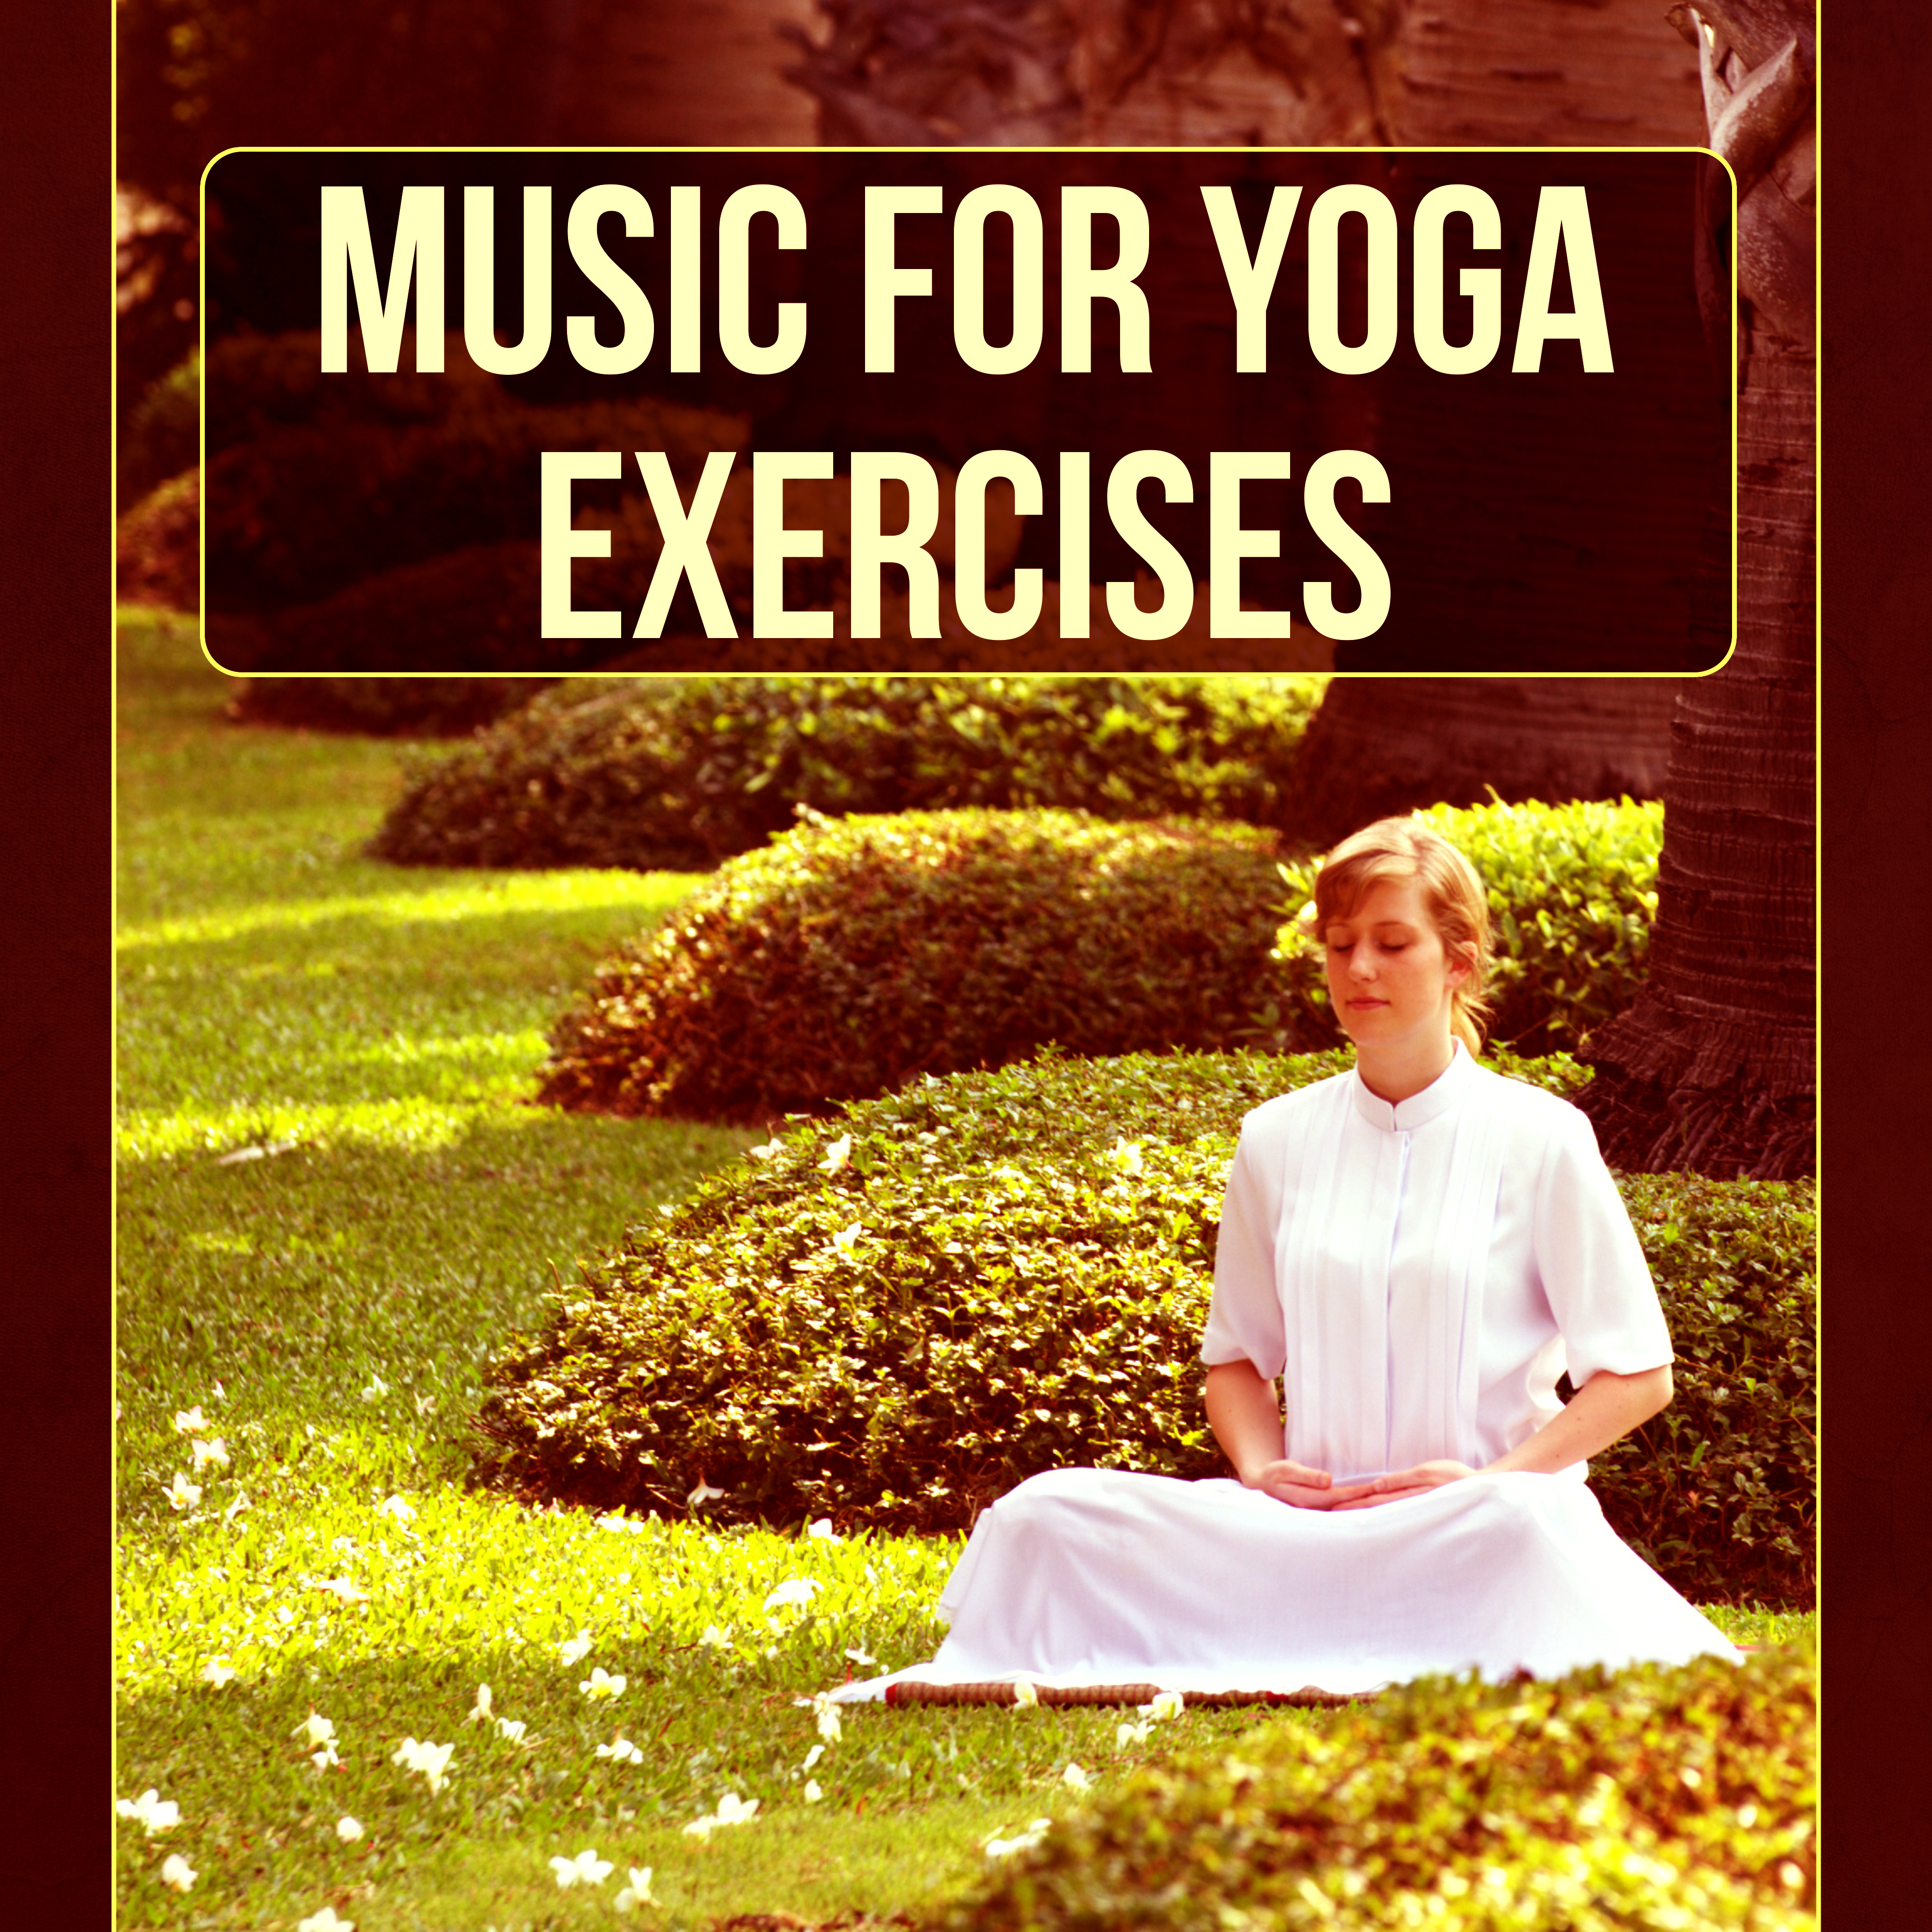 Music for Yoga Exercises  Yoga for Everyone, Morning Prayer, Hatha Yoga, Mantras, Natural Sounds to Calm Down, Yoga Music